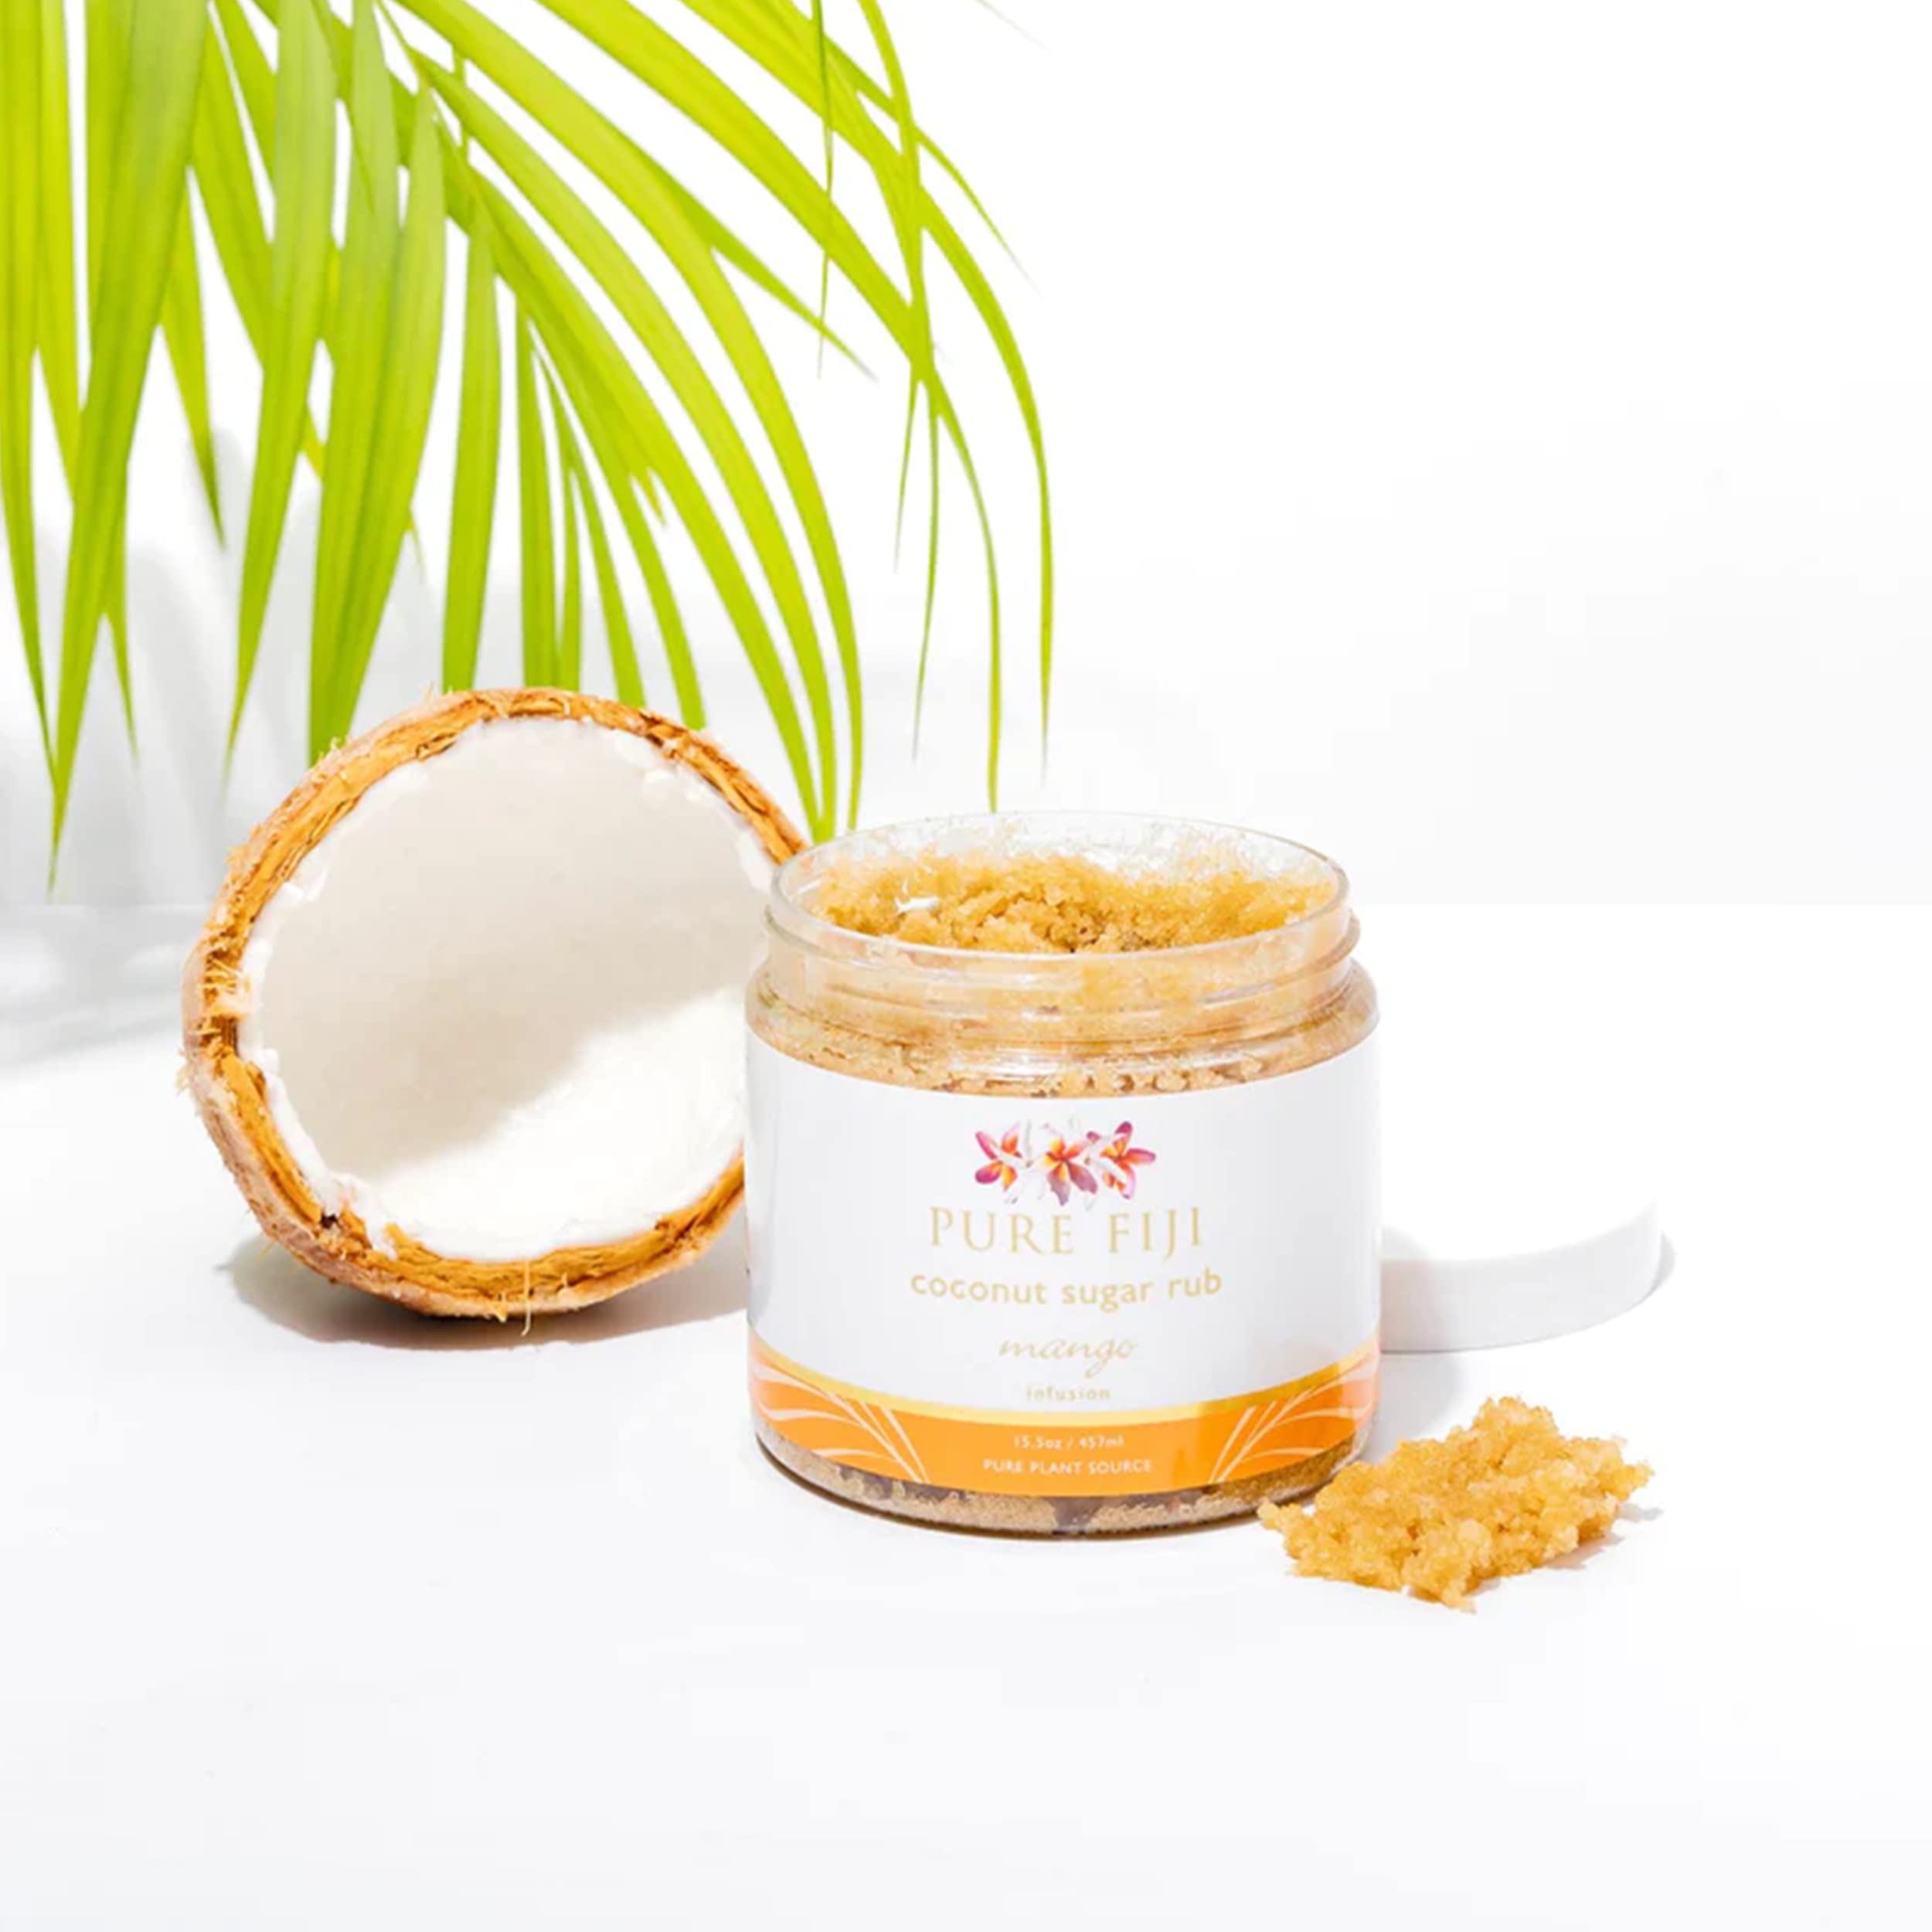 Pure Fiji Coconut Sugar Rub - Coconut Body Scrub Natural Origin for Smooths and Softens Skin - Organic Exfoliating Sugar Scrub for Body, Mango, 15.5 oz